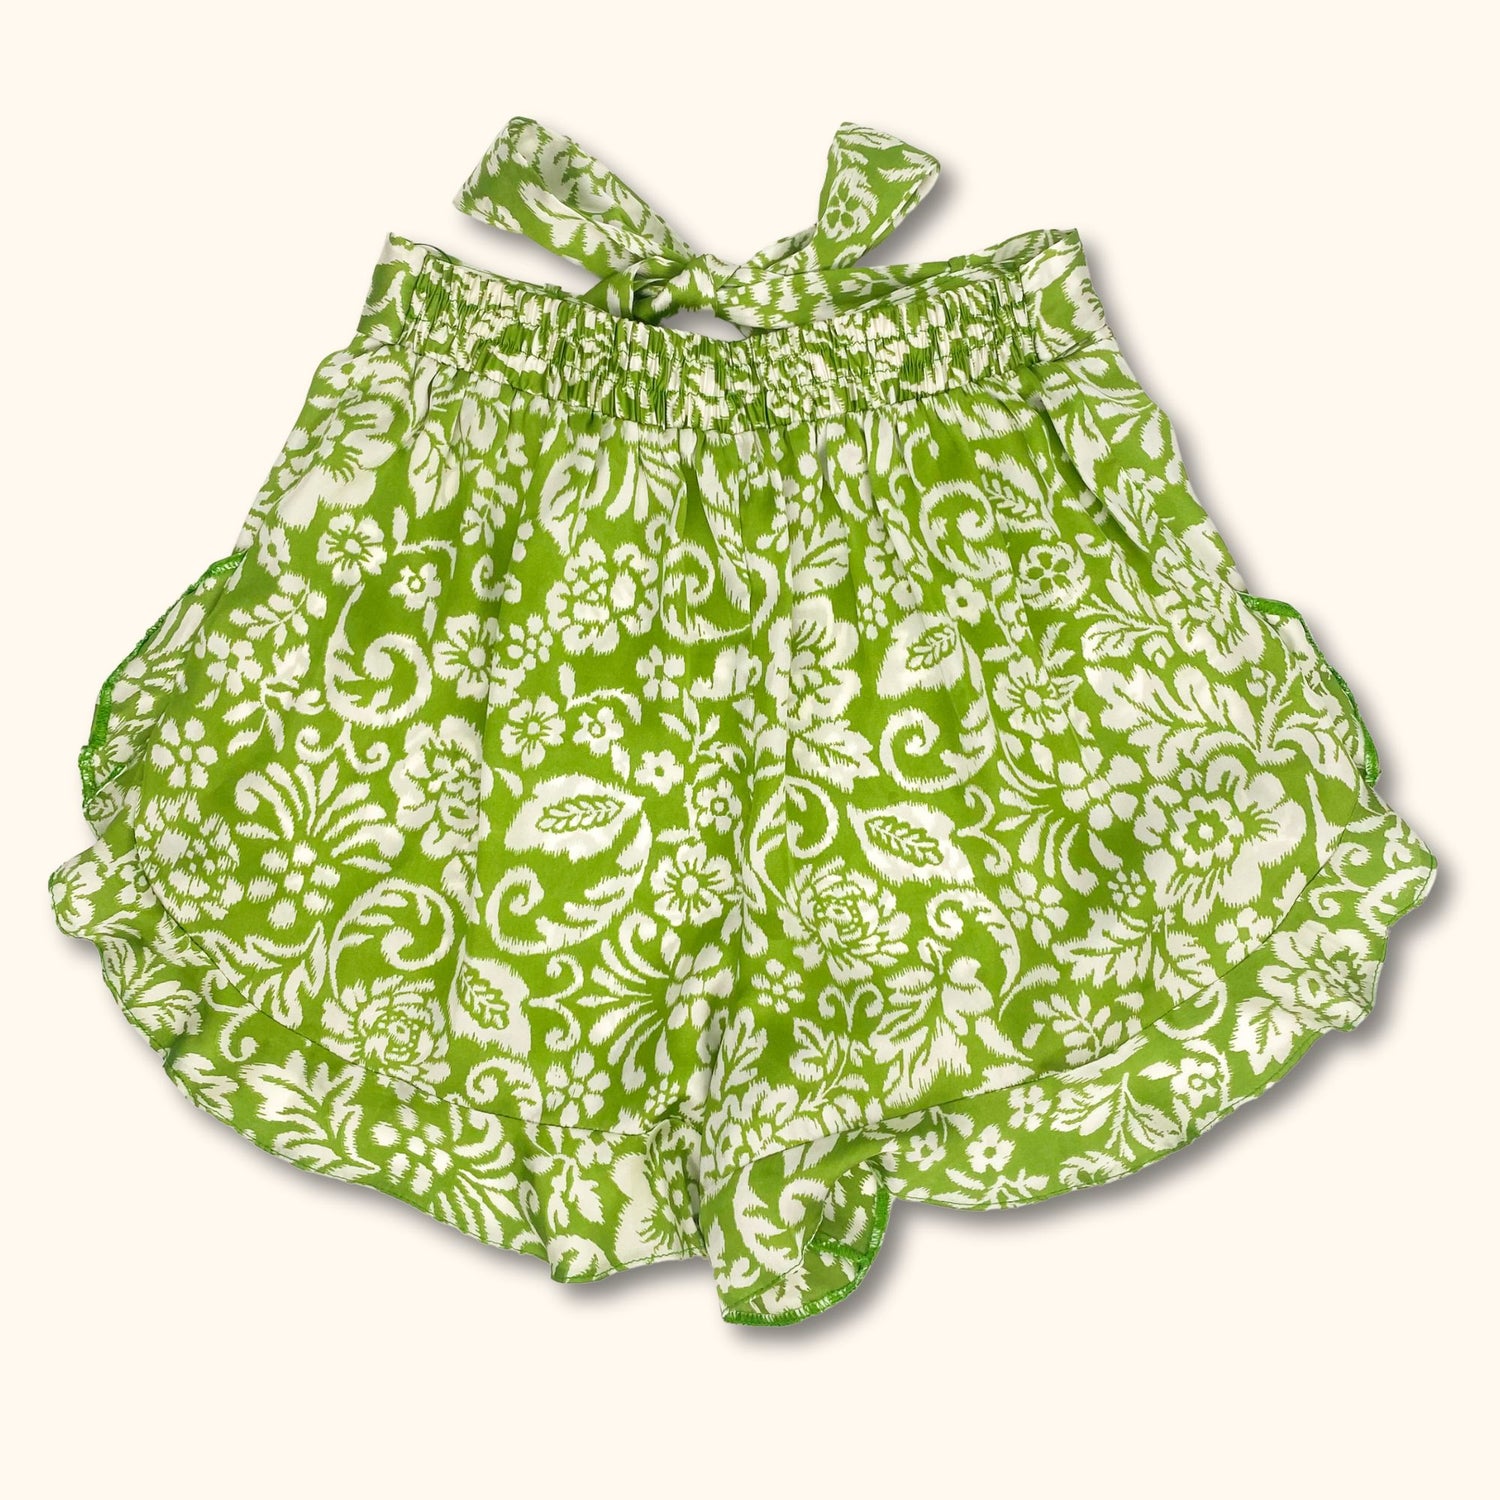 River Island Green Floral High Waist Flowy Shorts - Size 8 - River Island - Shorts